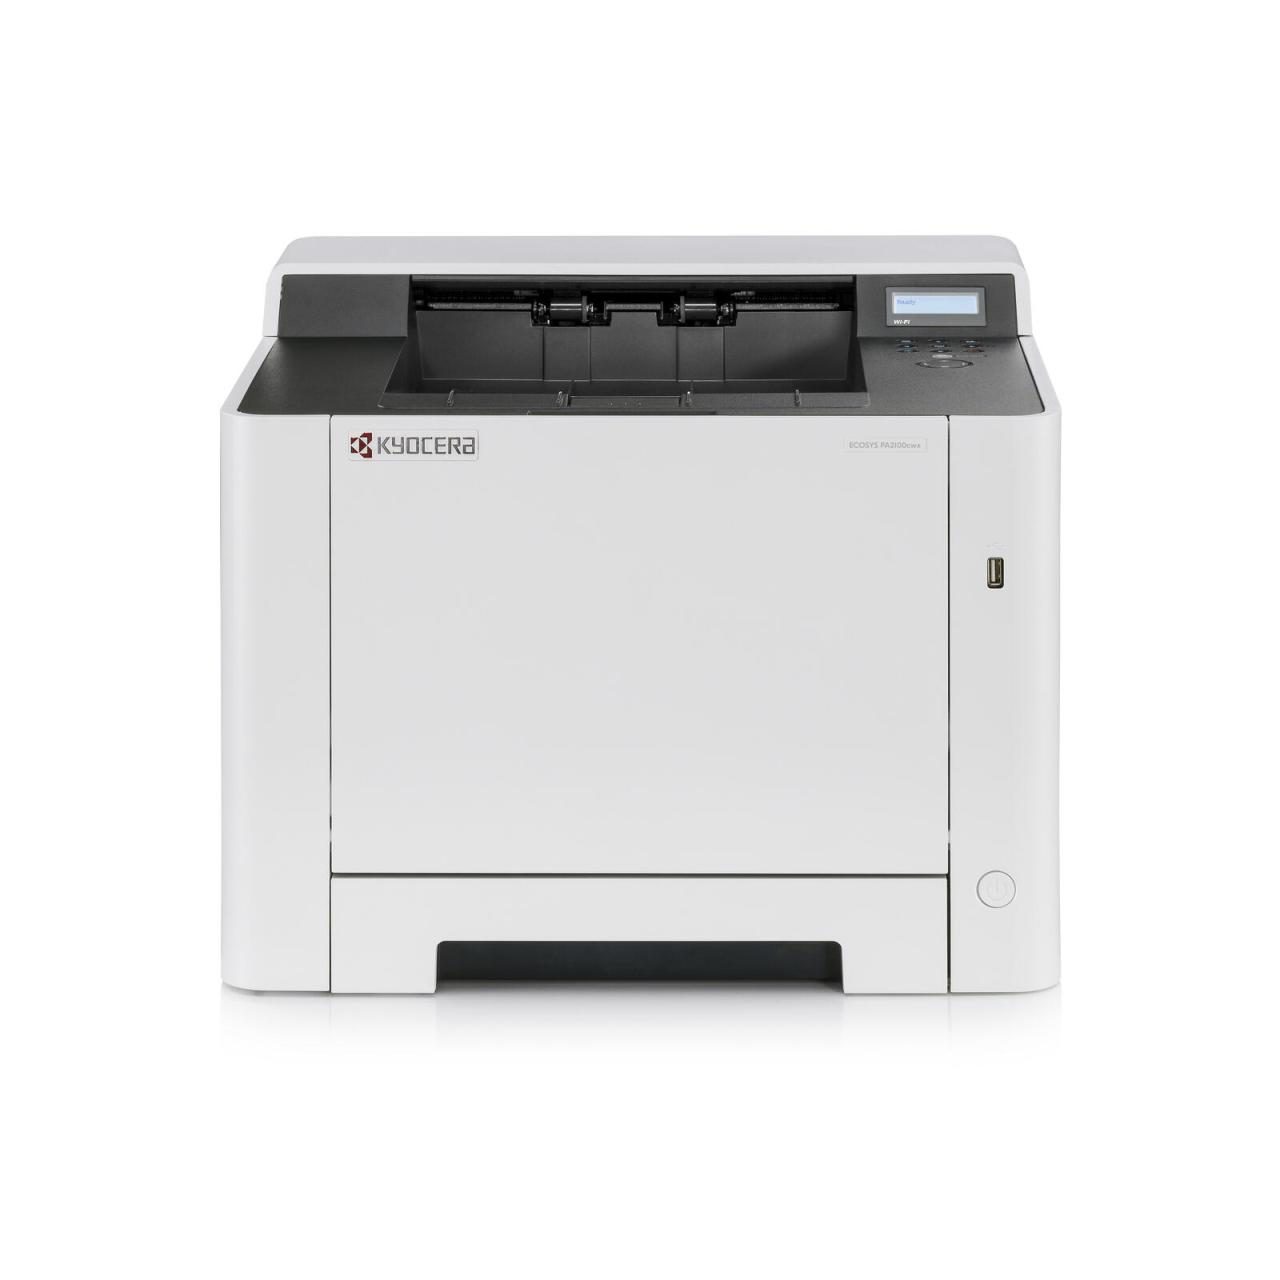 Kyocera ECOSYS PA2100cwx Laserdrucker s/w von Kyocera